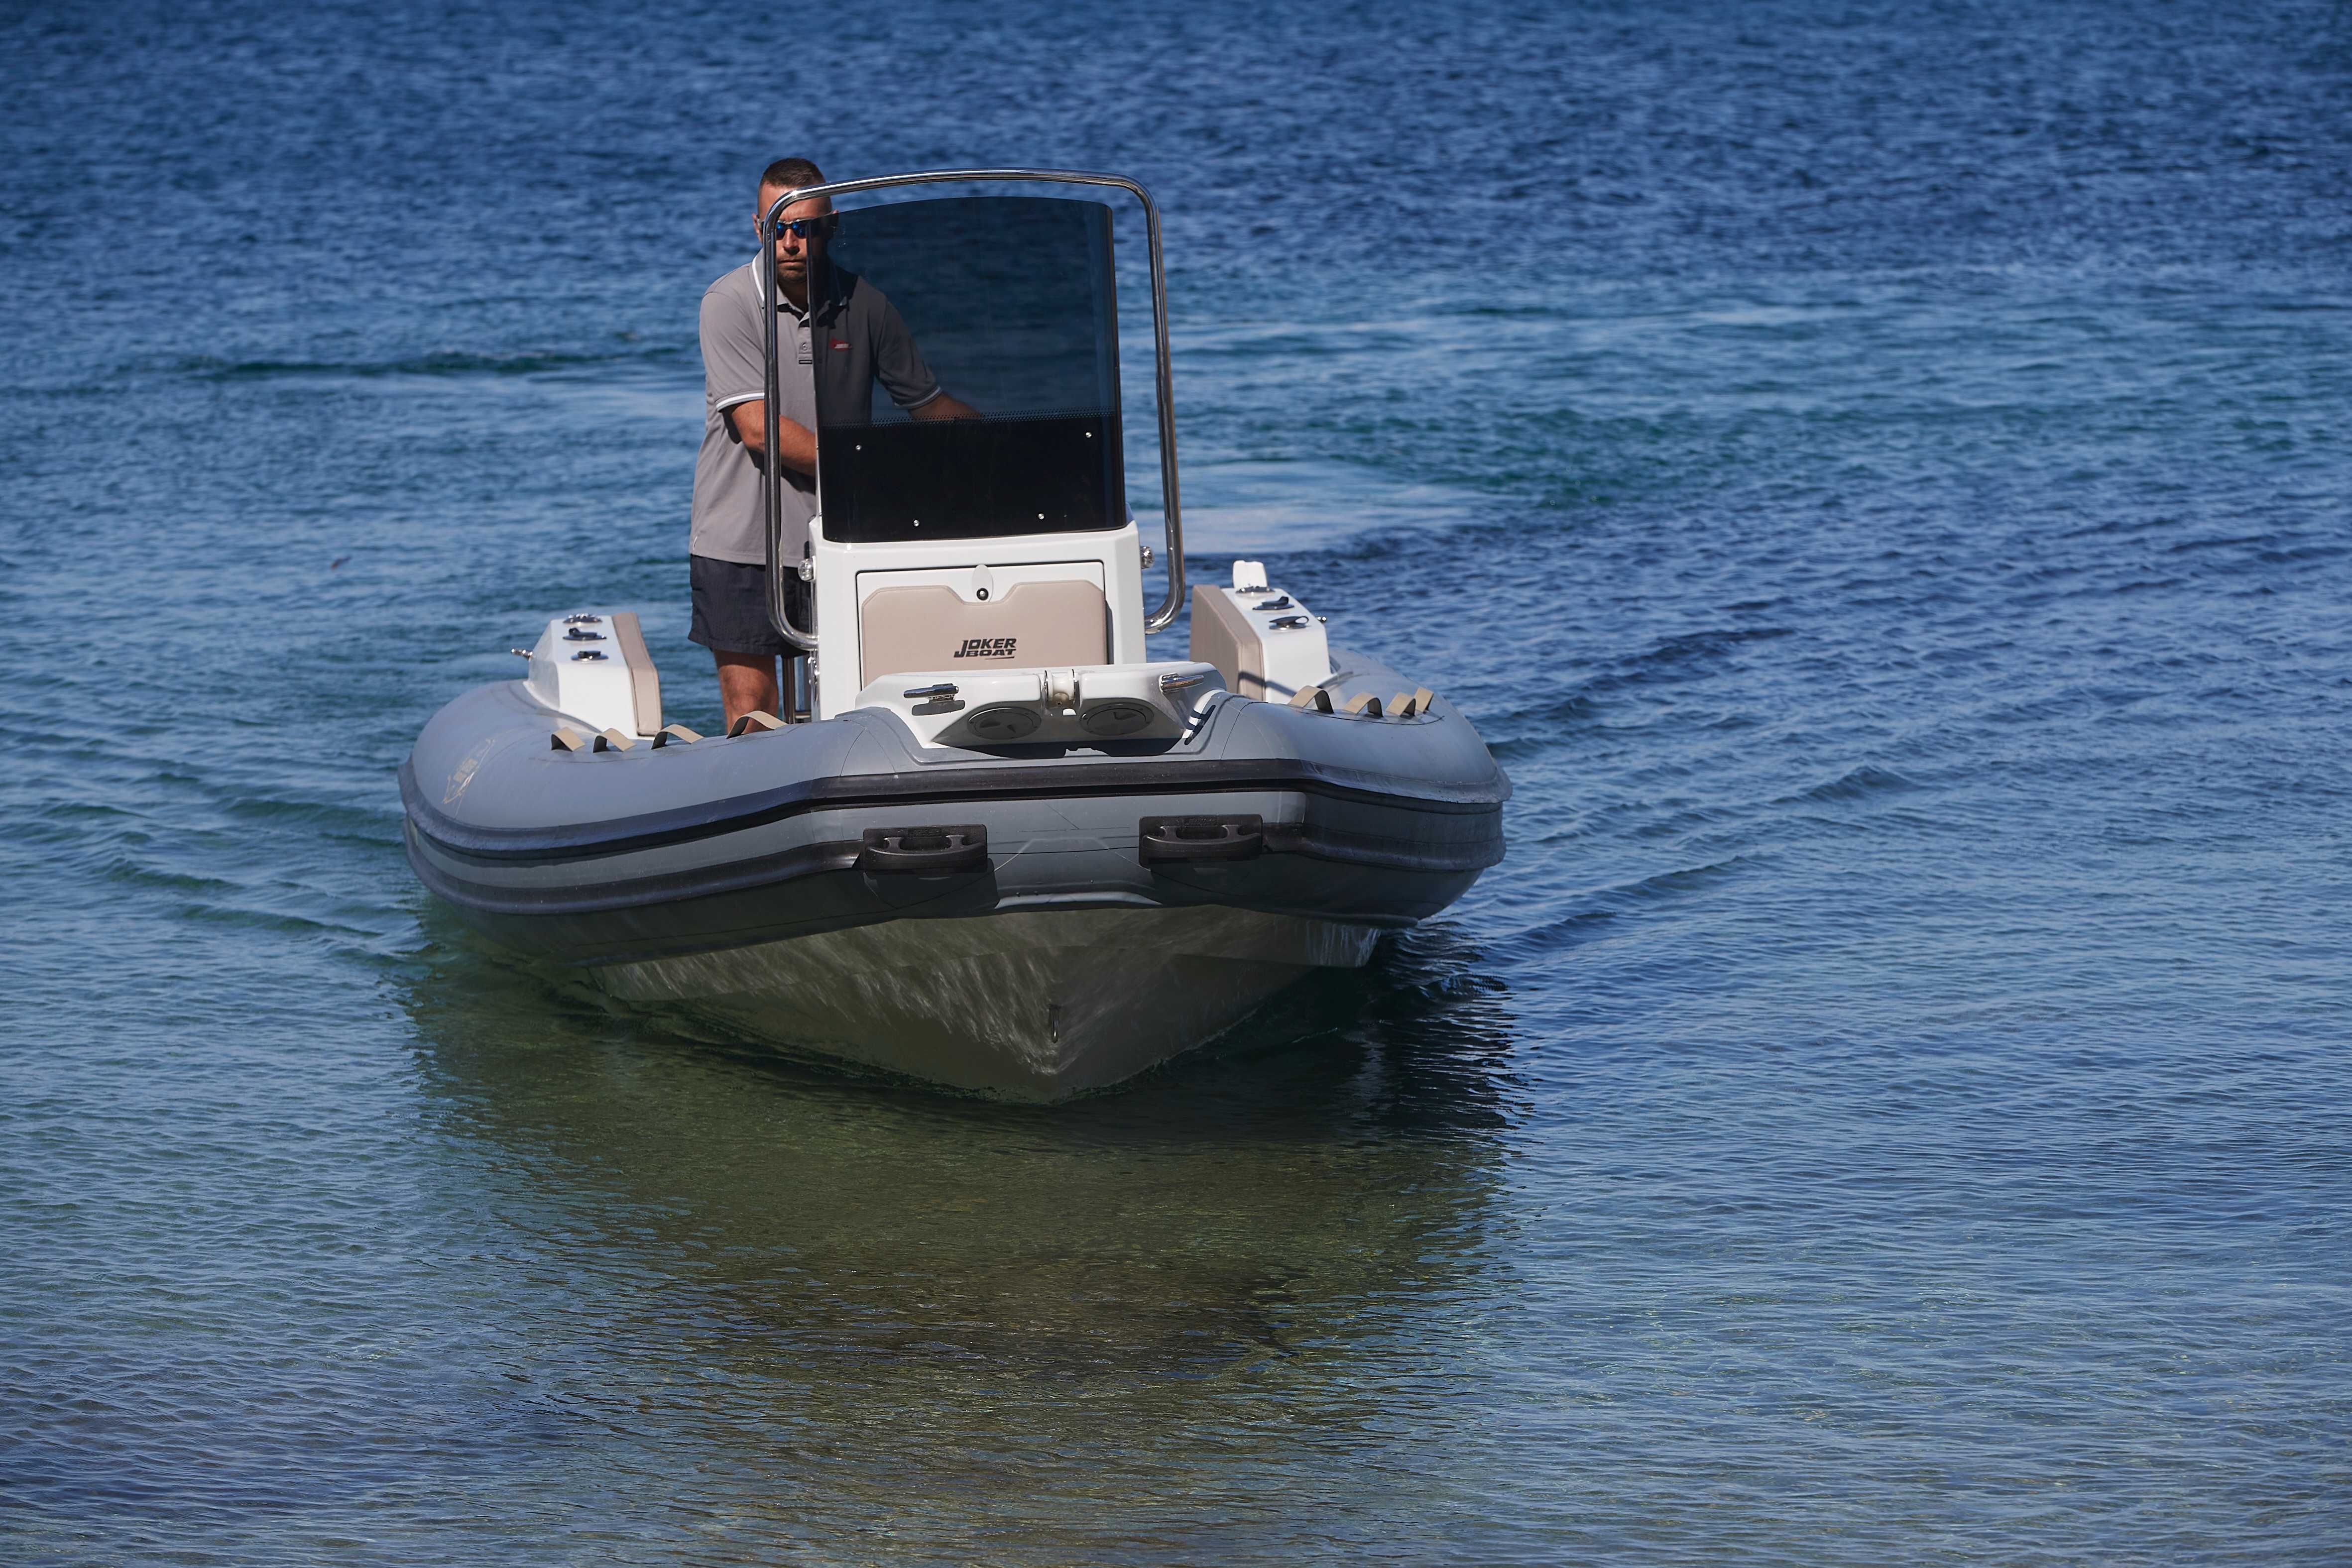 Łódź motorowa (wędkarska) Coaster 580 Barracuda produkcji Joker Boat